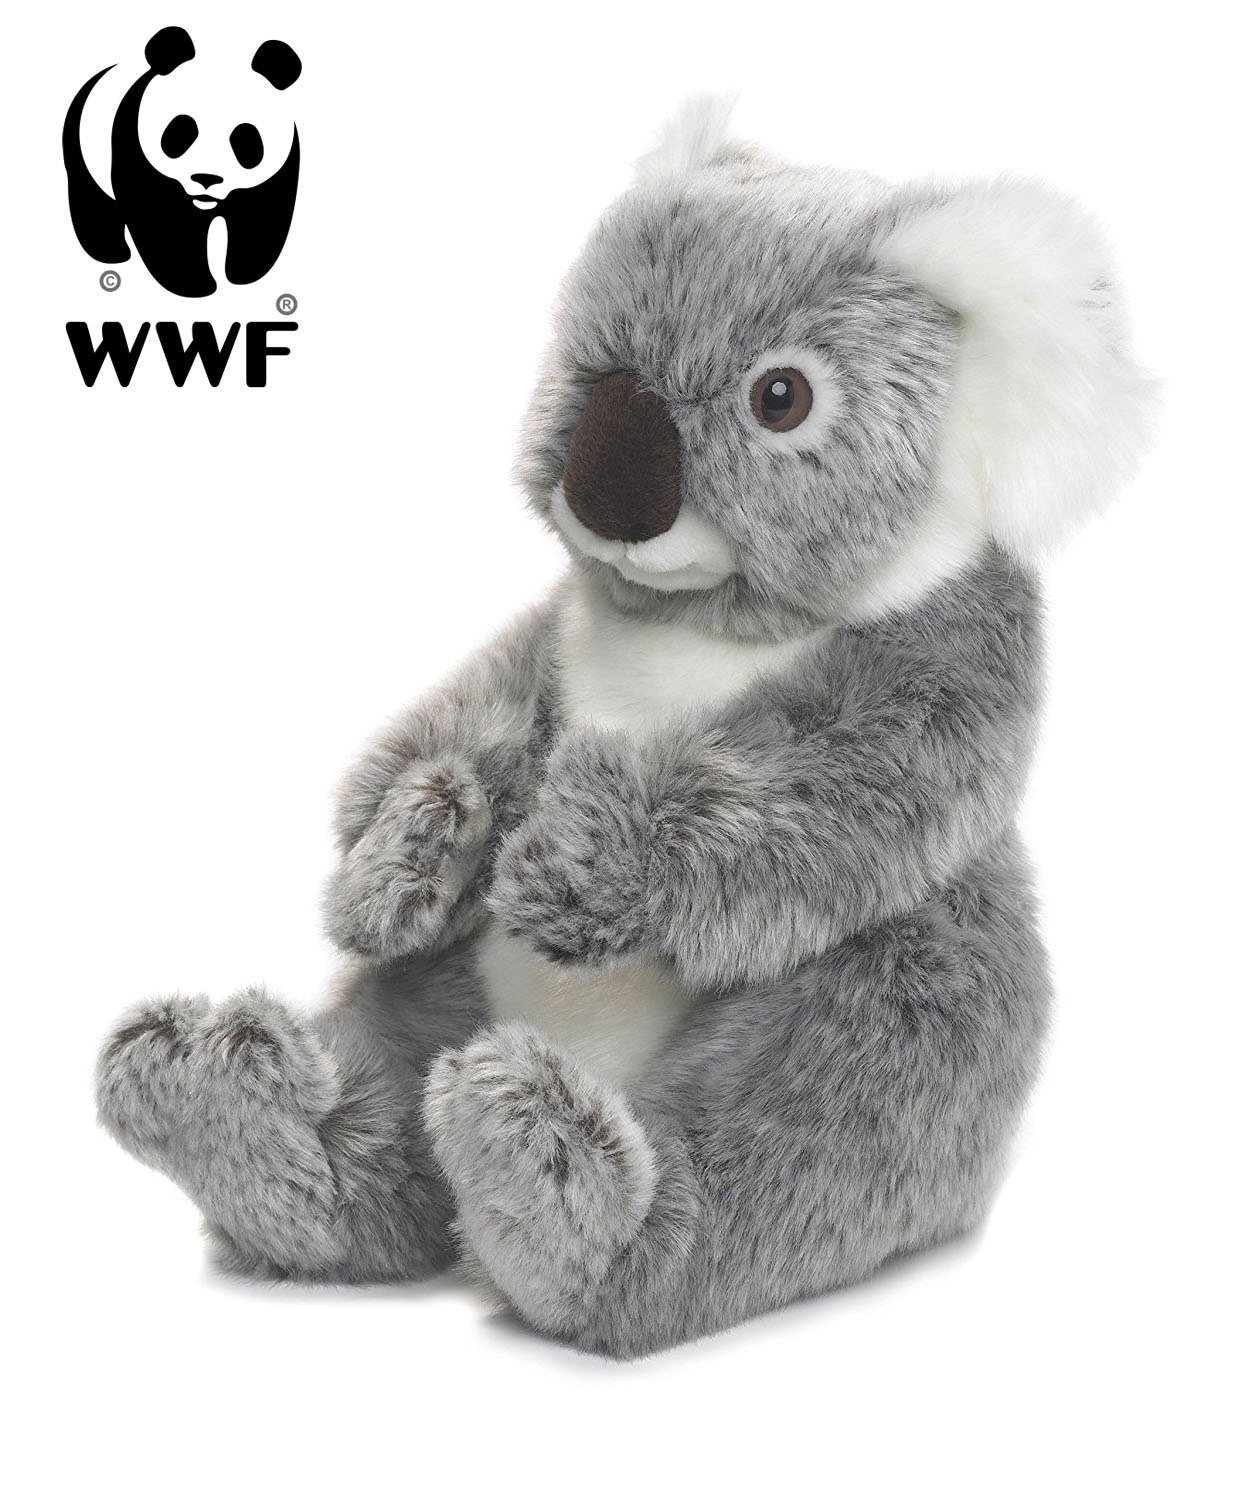 XXL Plüschtier Koala Bär 100 cm Sunkid Kuscheltier weich Plüsch grau Stofftier 